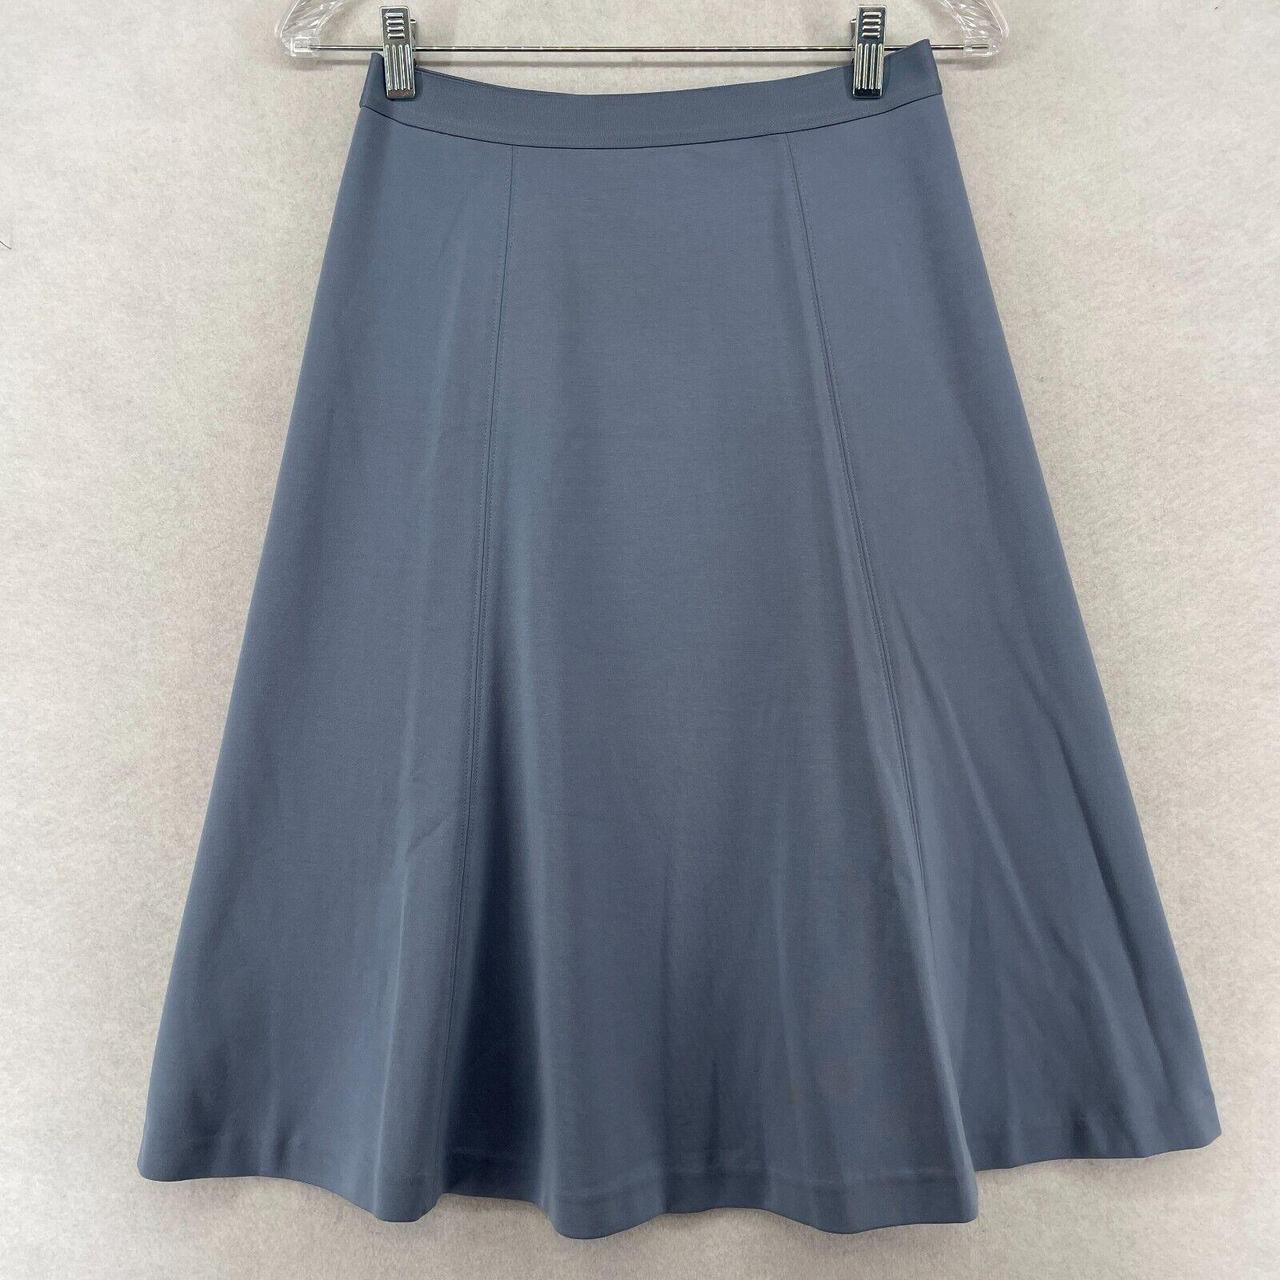 UNIQLO Stretch Rayon Jersey Skirt 26-27 Elastic... - Depop